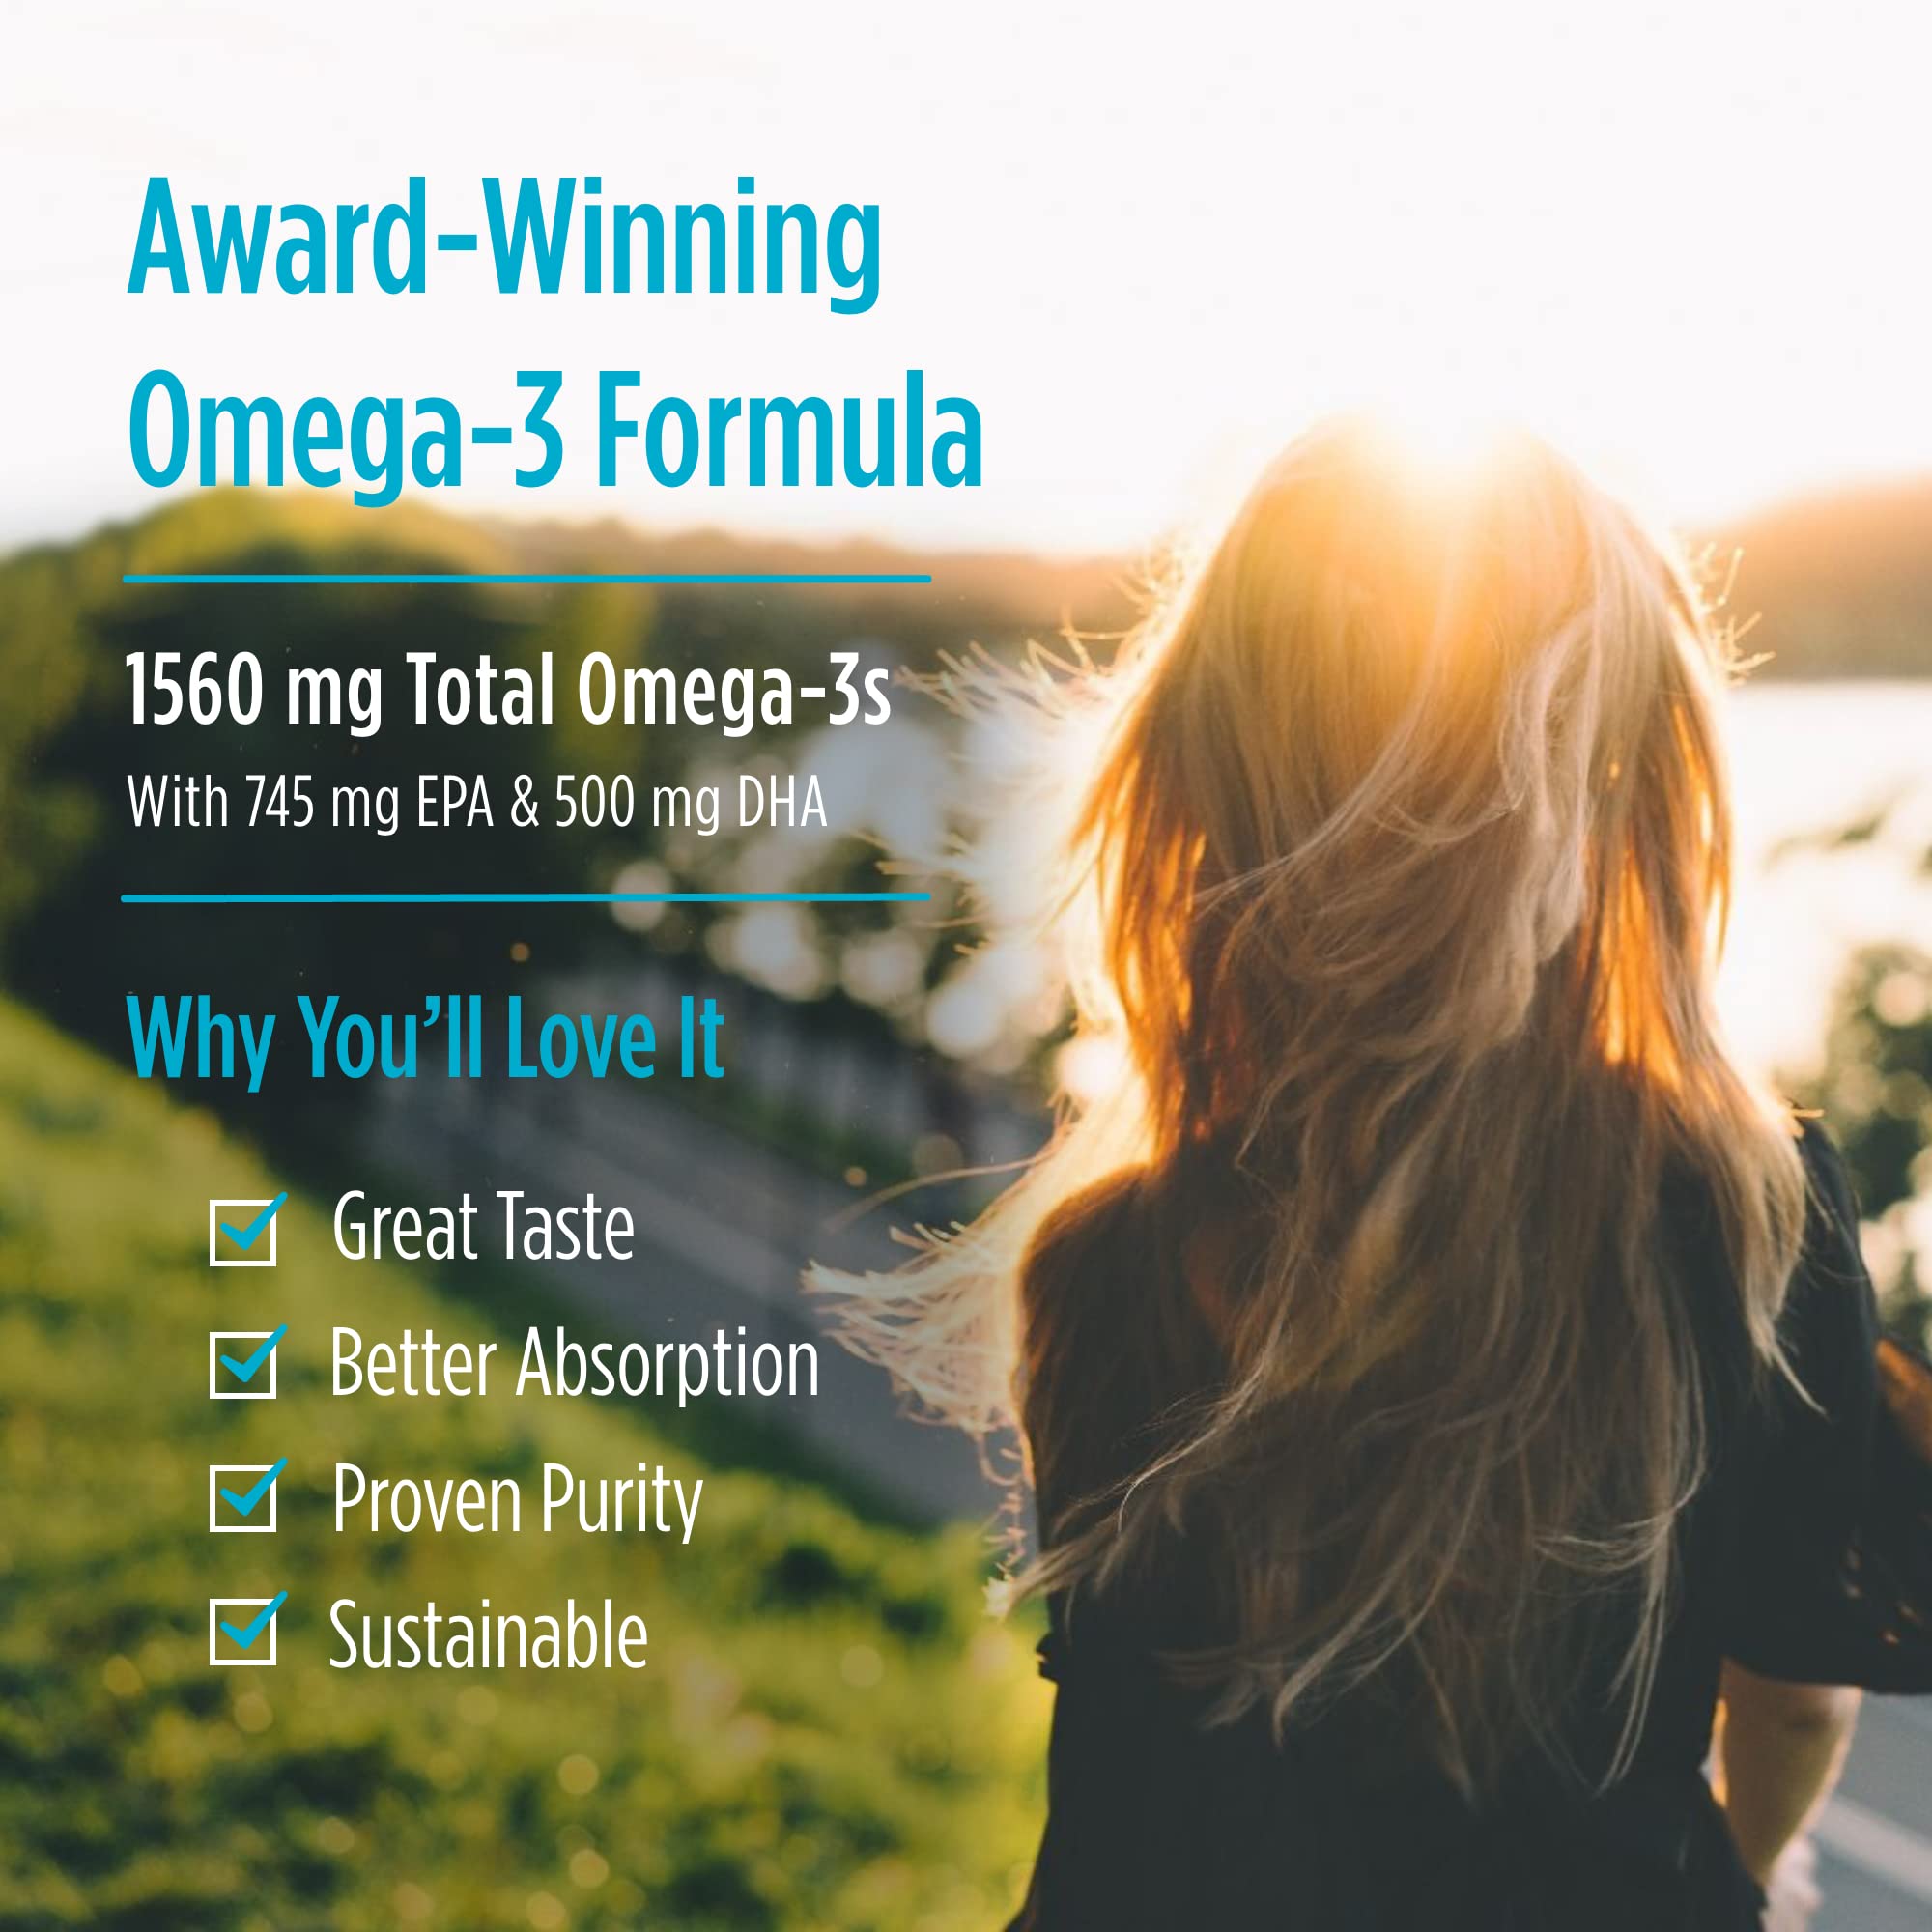 Nordic Naturals Omega-3, Lemon Flavor - 8 oz - 1560 mg Omega-3 - Fish Oil - EPA & DHA - Immune Support, Brain & Heart Health, Optimal Wellness - Non-GMO - 48 Servings